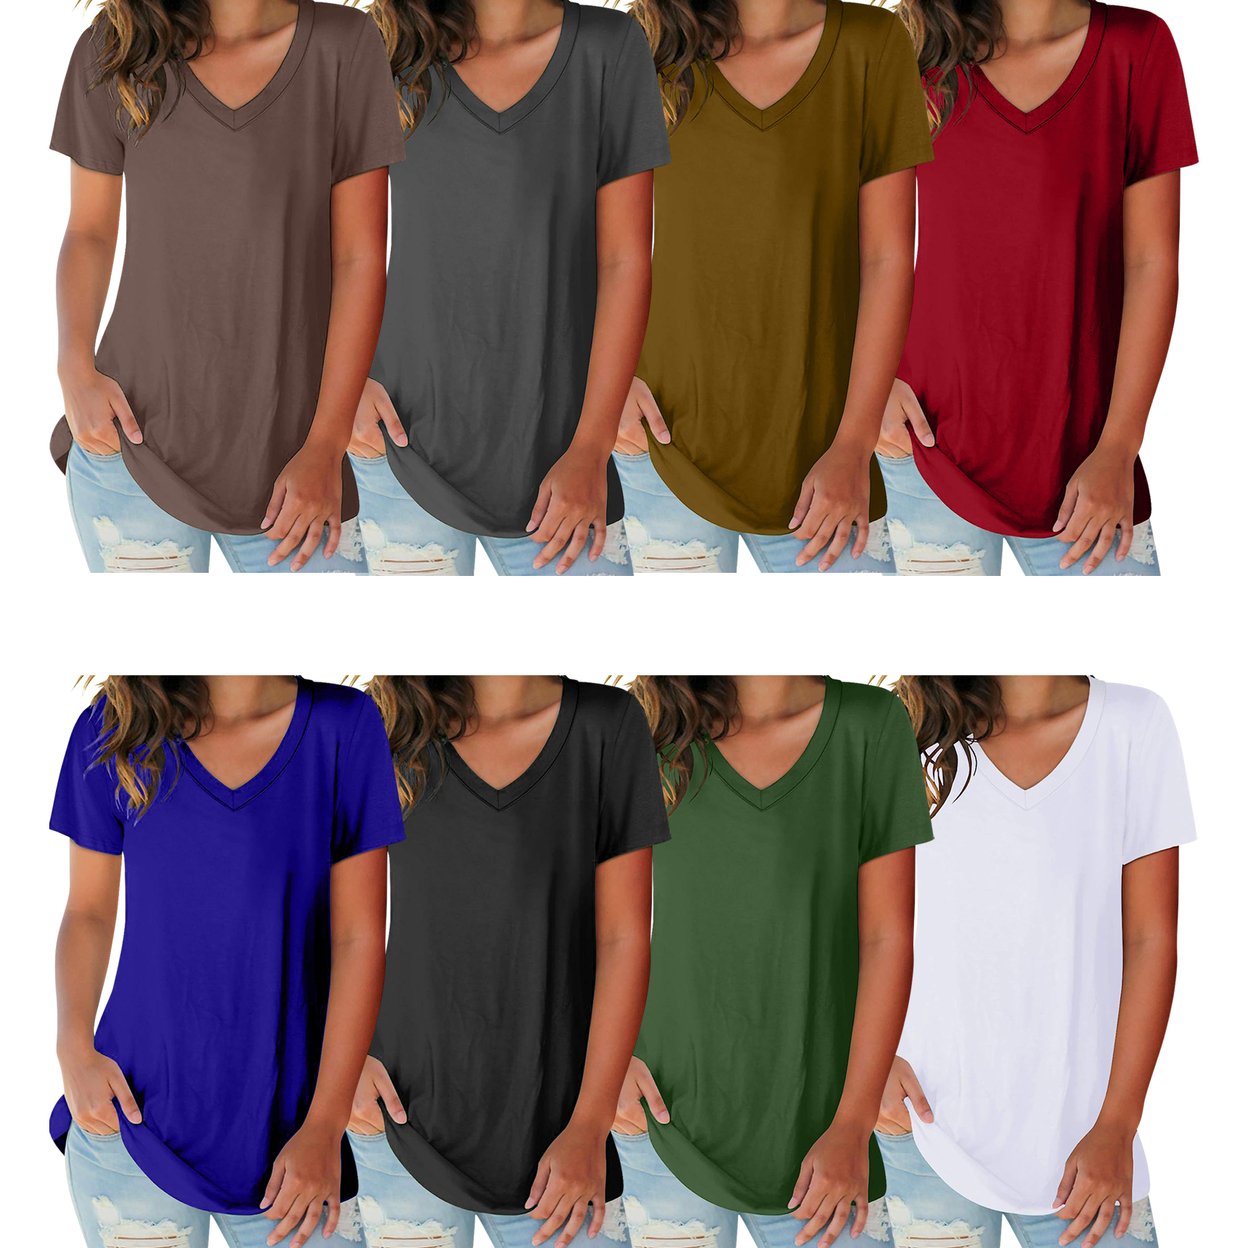 2-Pack: Women's Ultra Soft Smooth Cotton Blend Basic V-Neck Short Sleeve Shirts - Navy & Brown, X-large